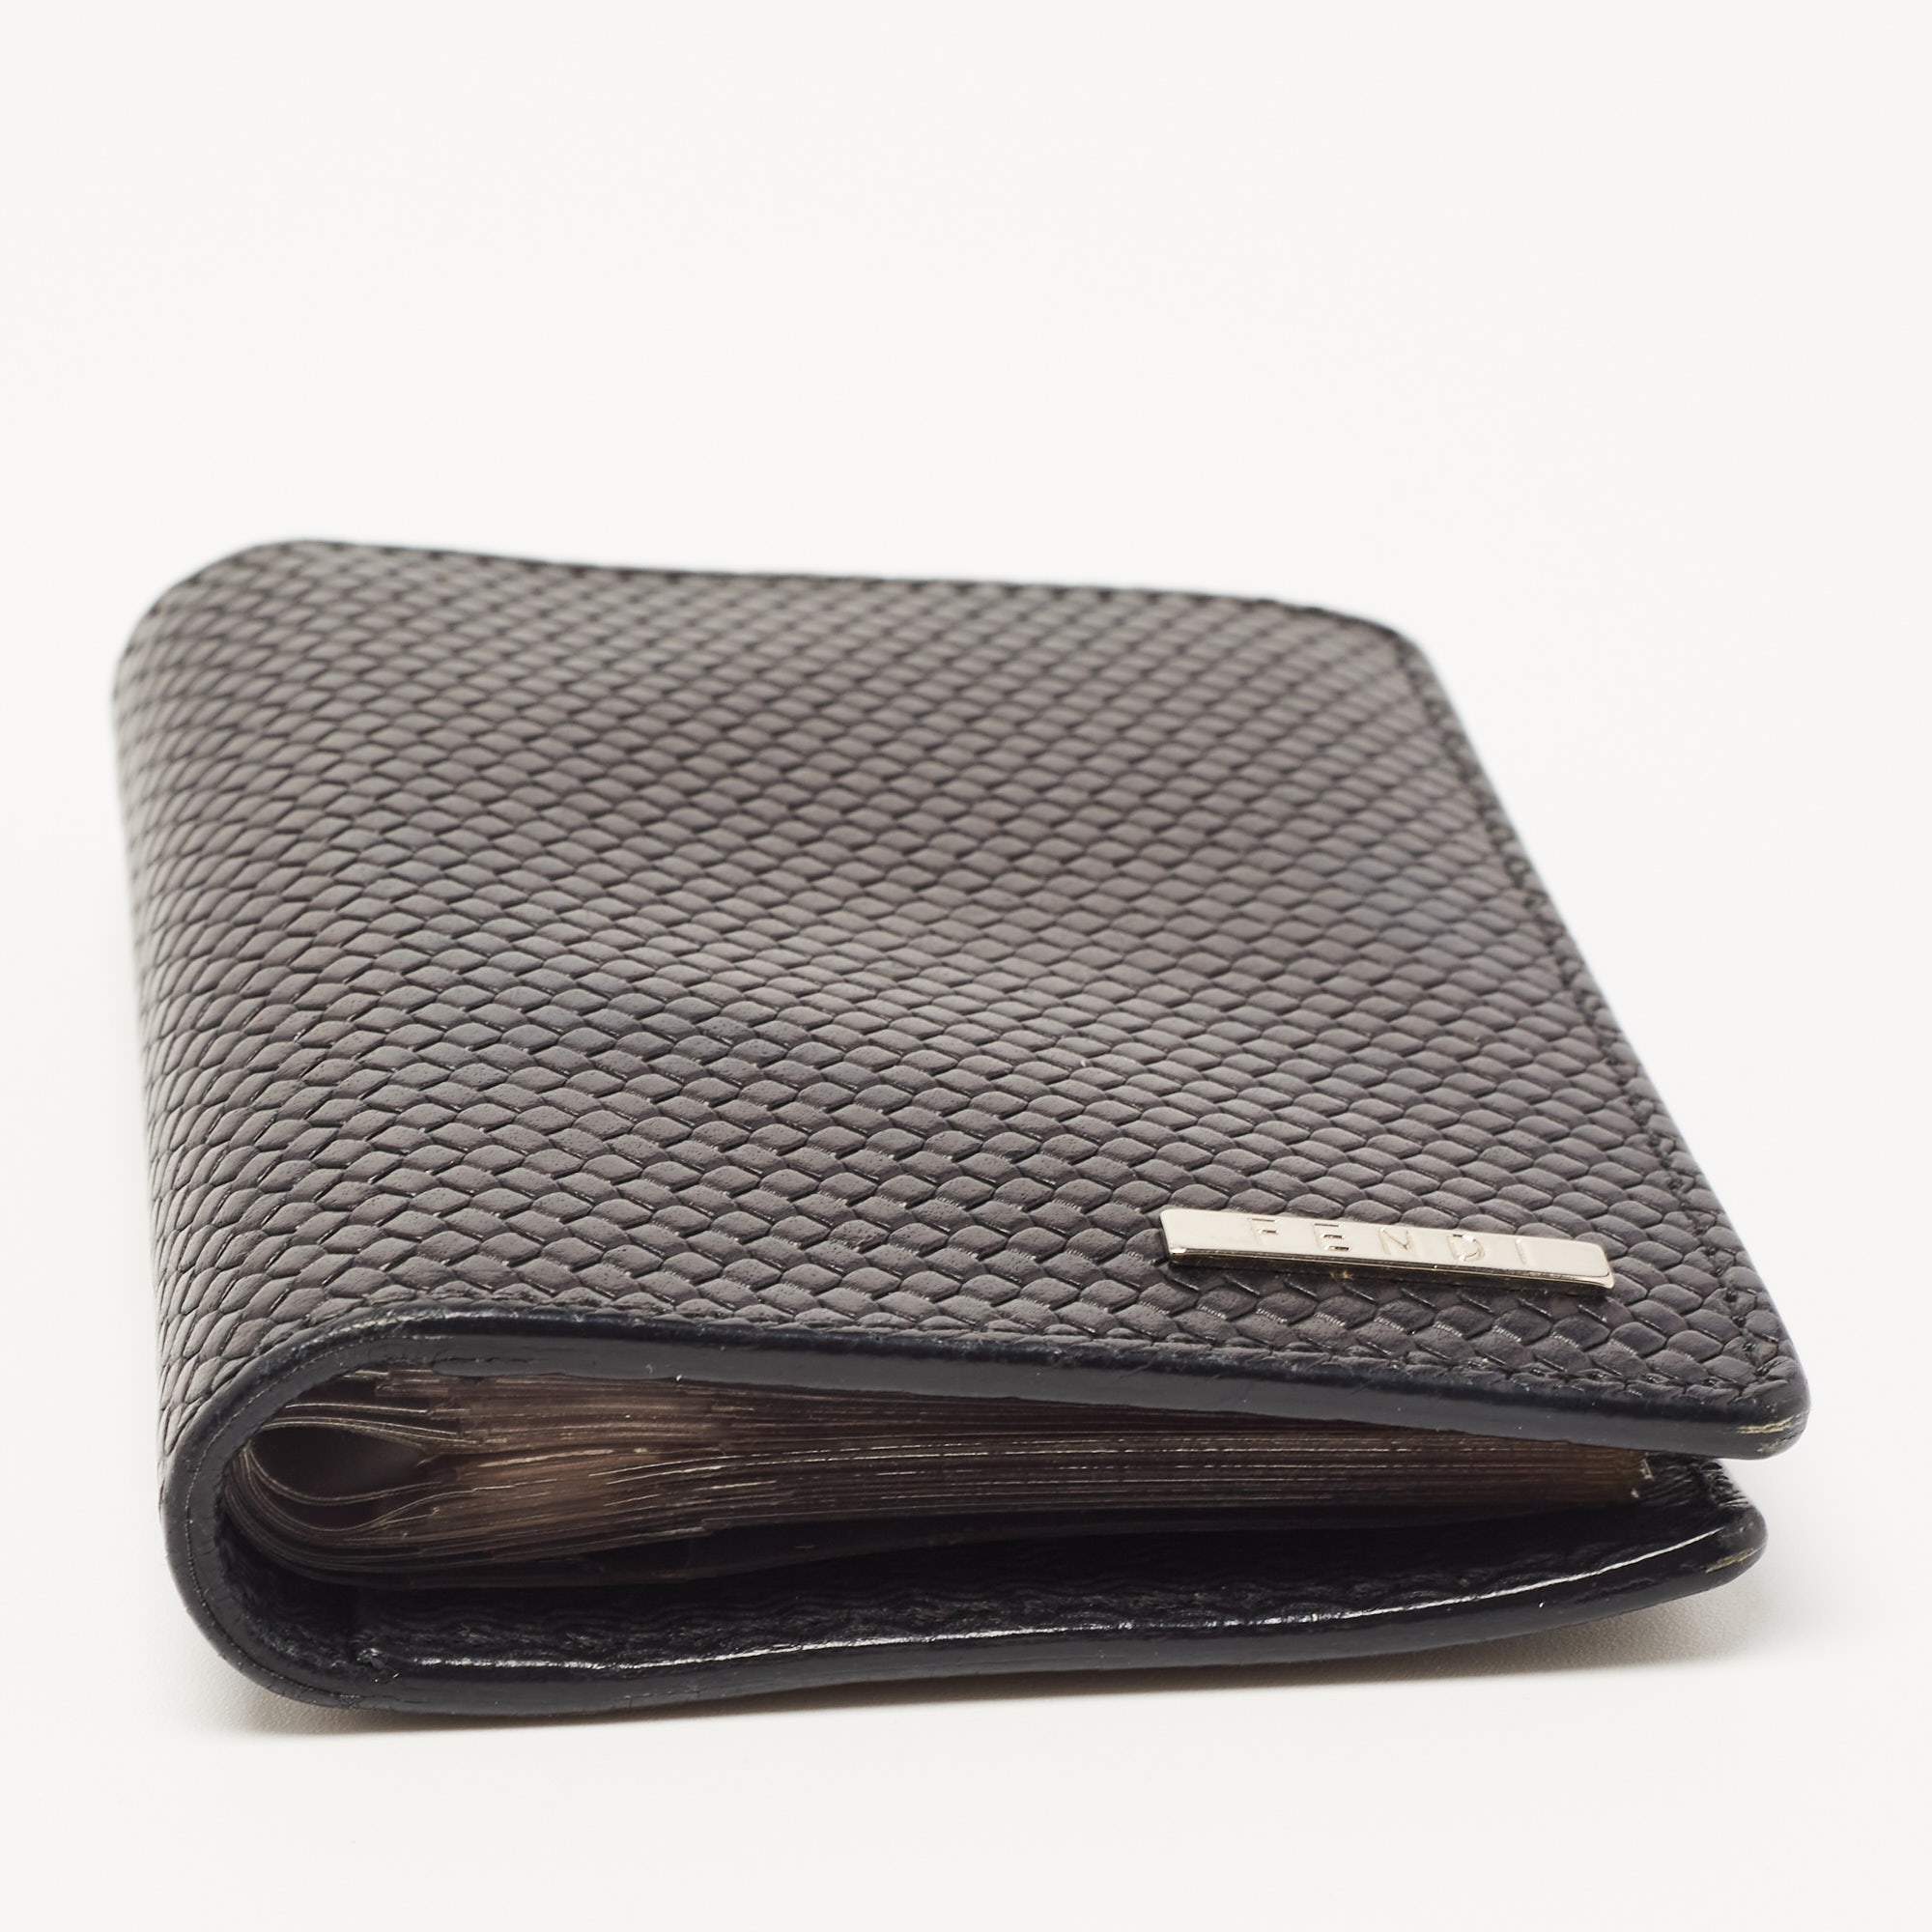 Fendi Black Textured Leather Bifold Card Case